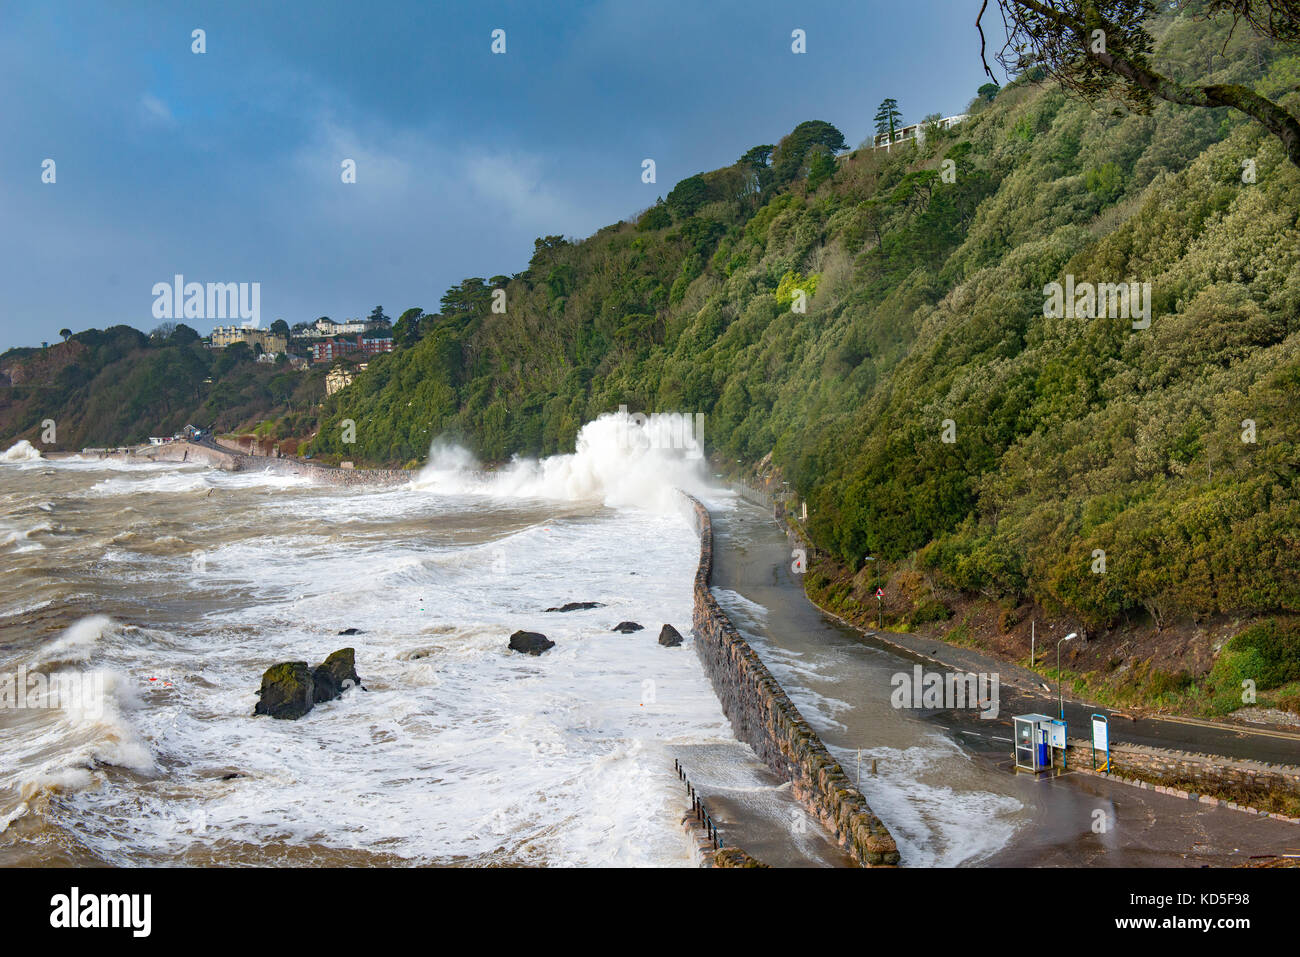 Straßensperrung entlang Meadfoot Beach, Torquay, Devon, als riesige Wellen im Meer Wand während eines Sturms verzurren. Wetter Bombe Stockfoto